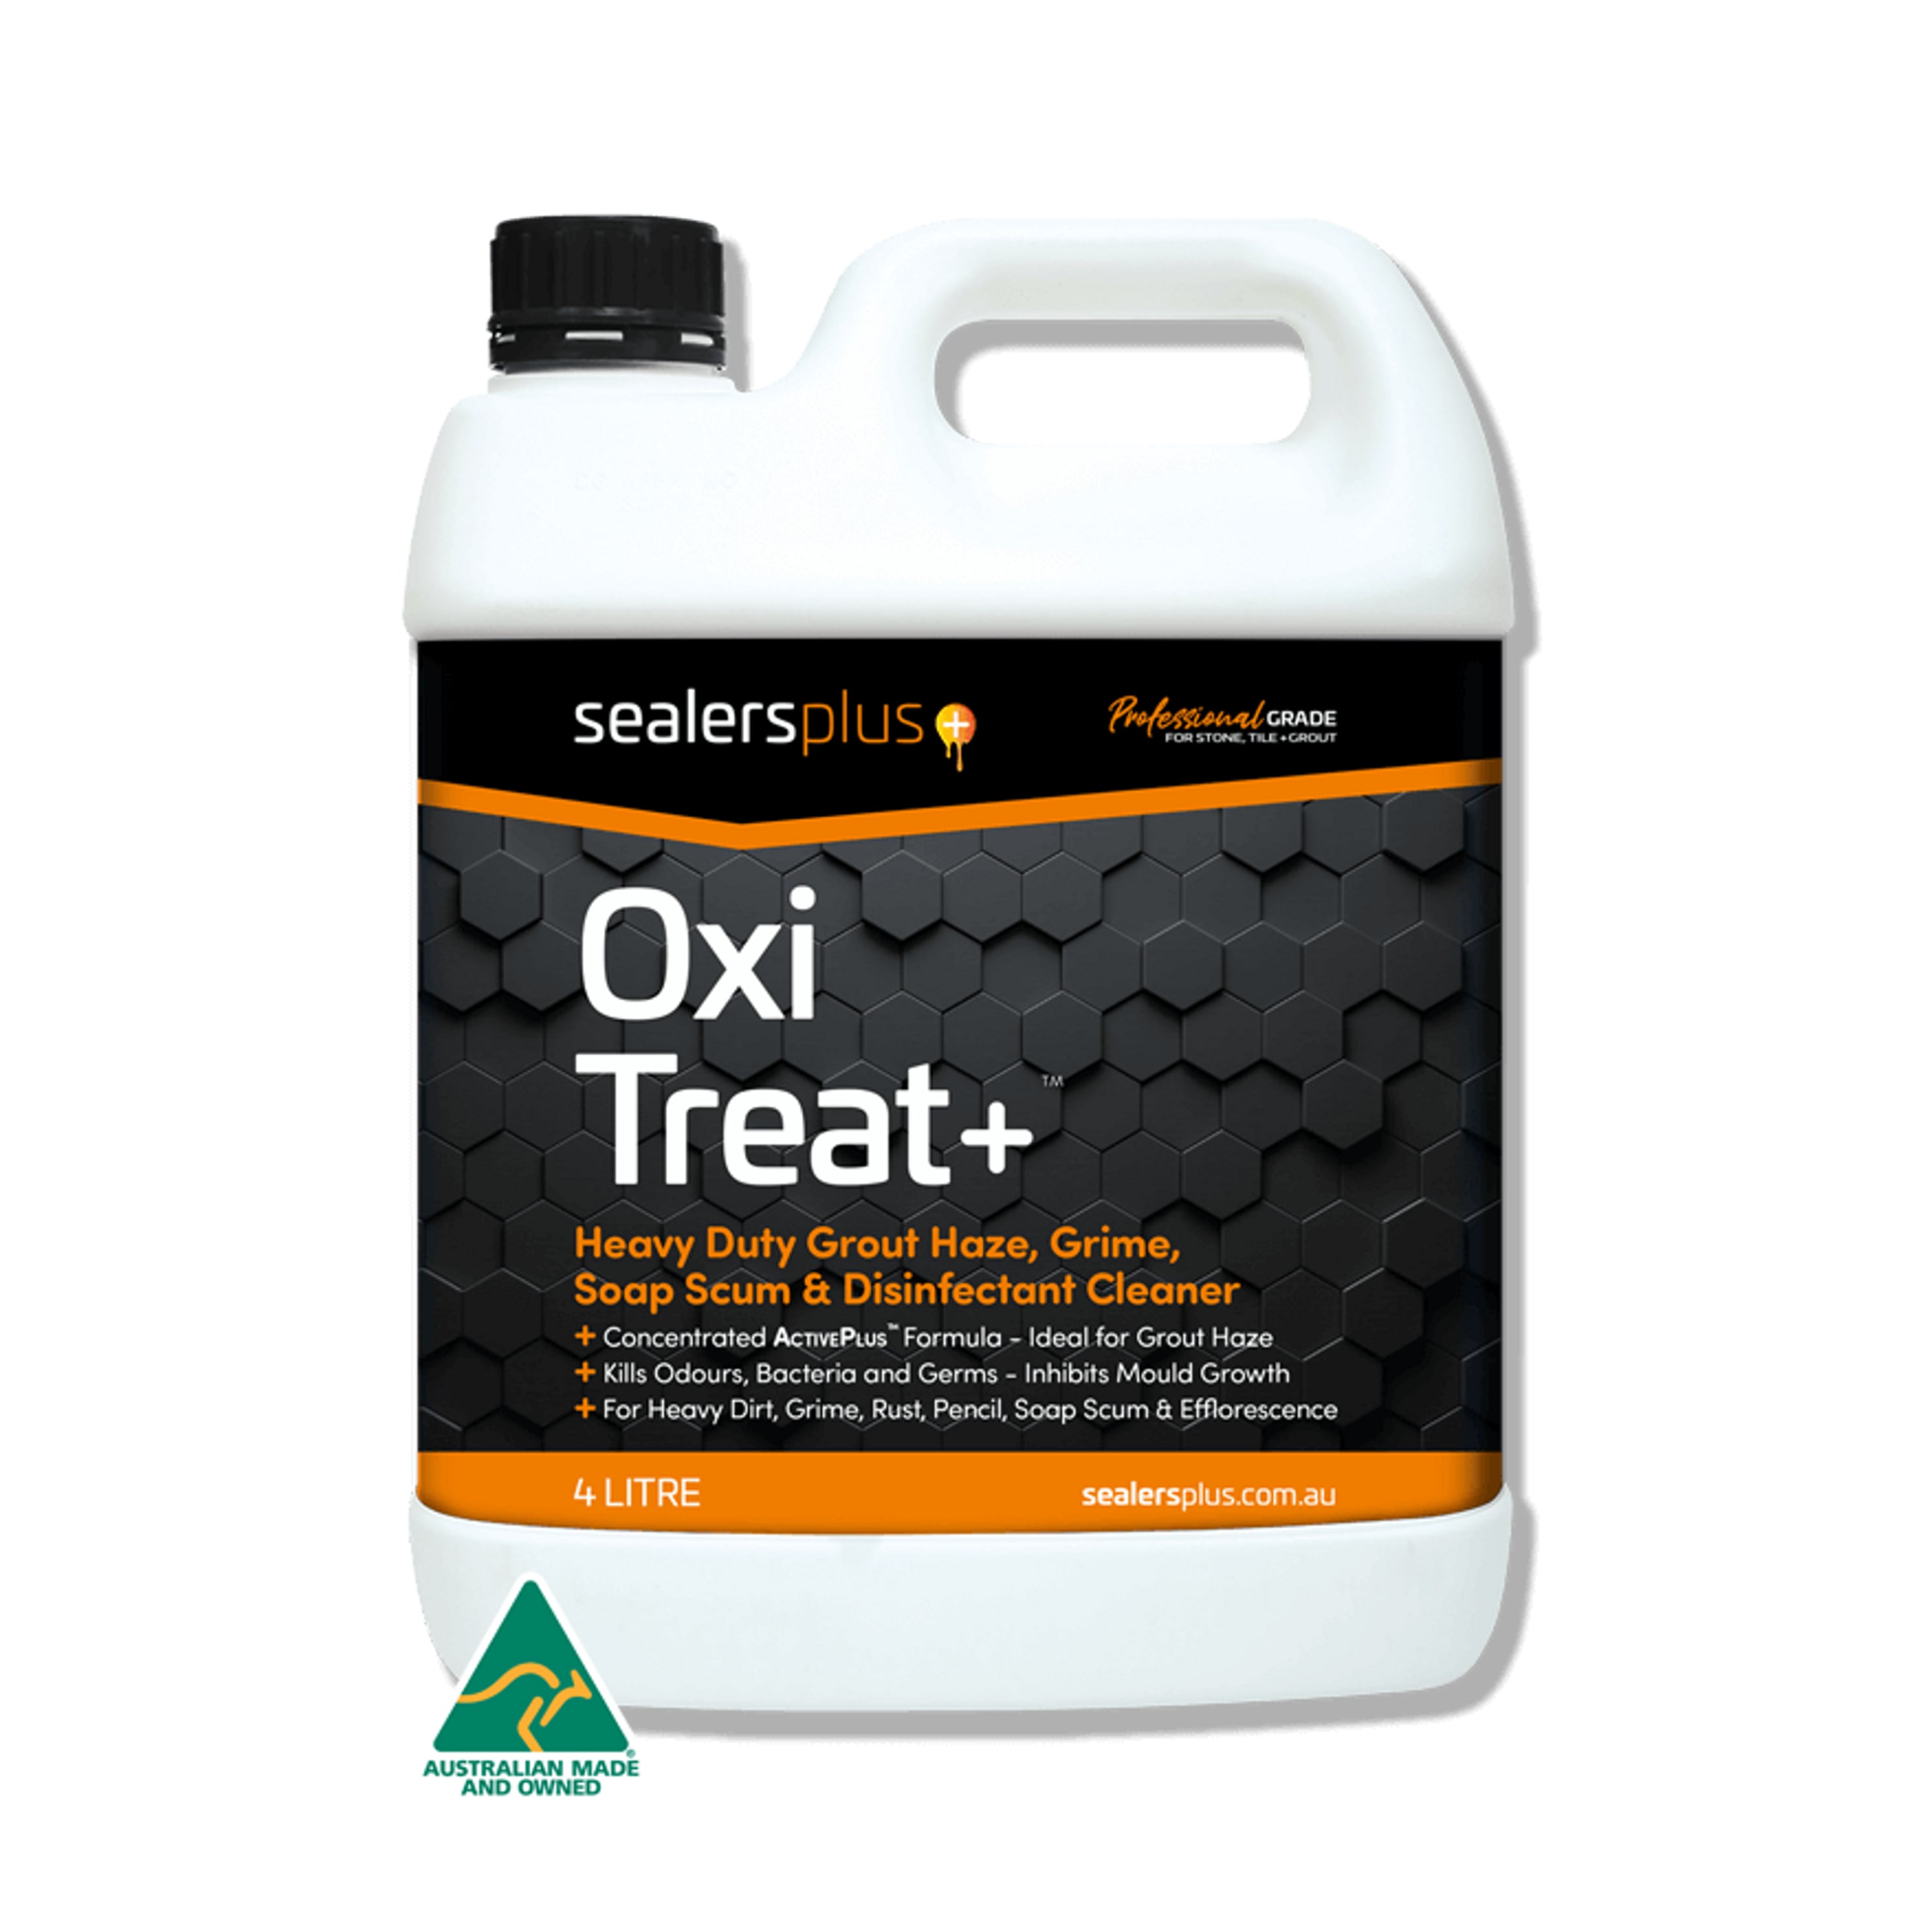 Oxitreat+ – Professional Grade Heavy Duty Grout Haze, Grime, Soap Scum Cleaner & Disinfectant Aqua Seal